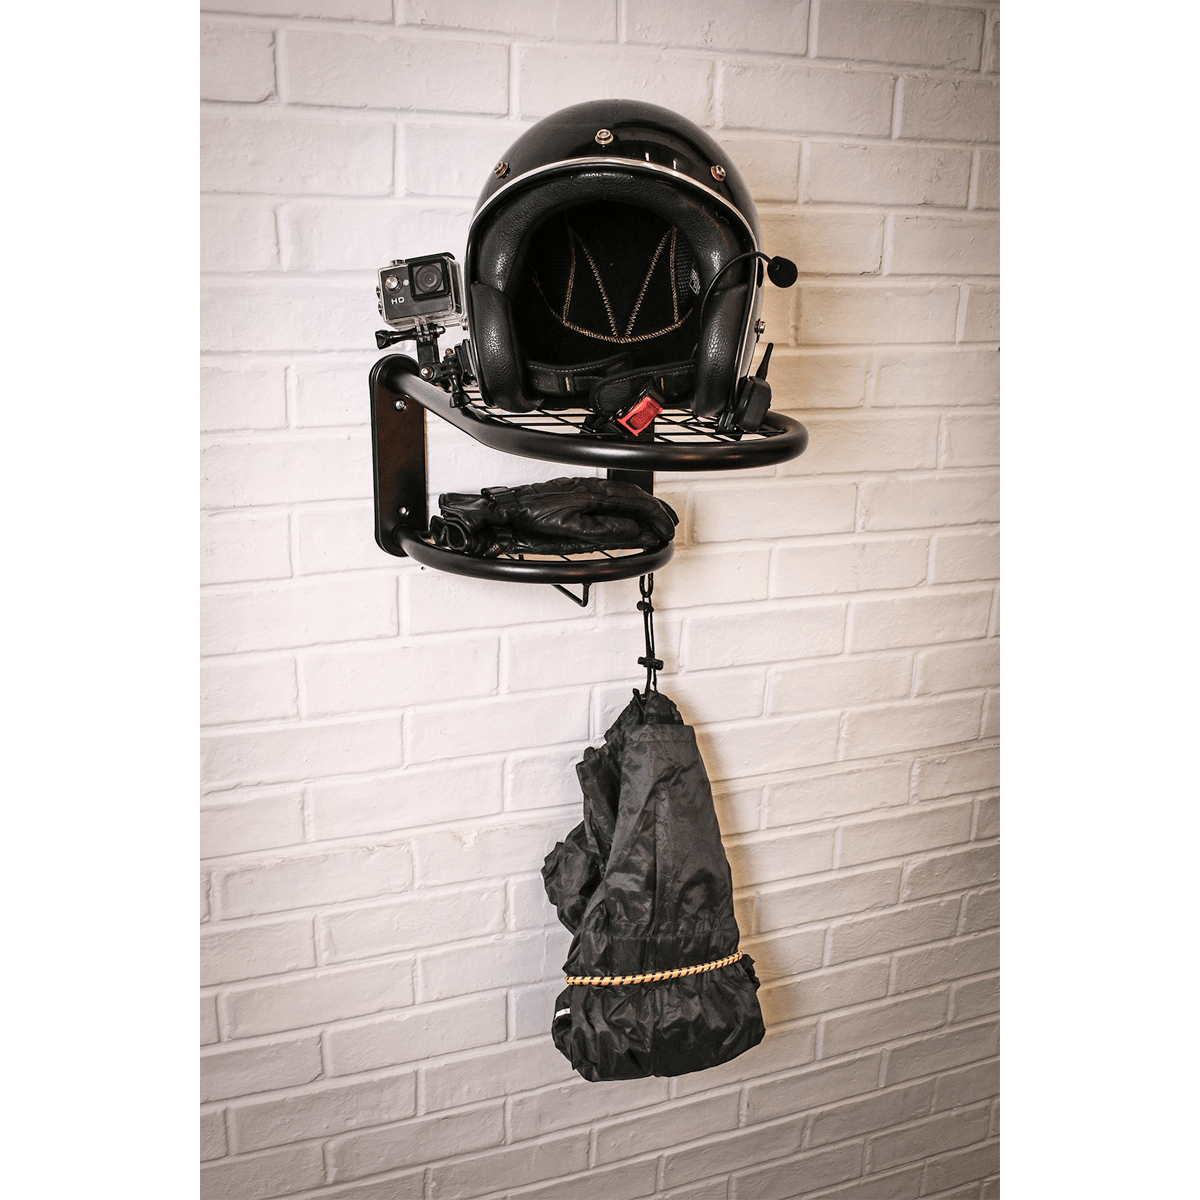 Motorcycle Helmet & Gear Tidy